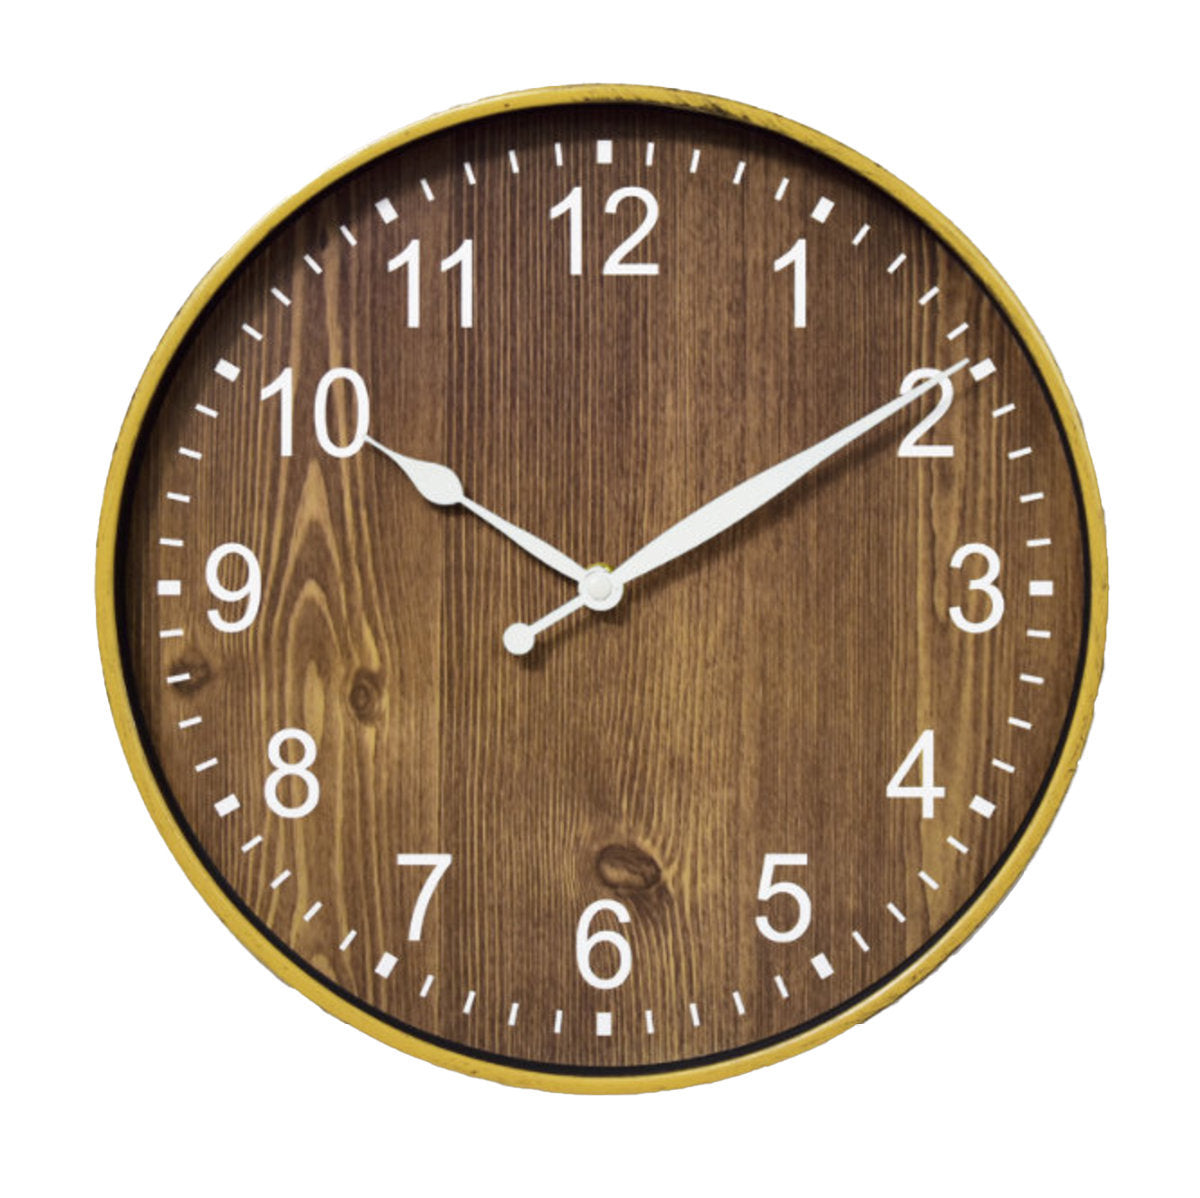 12-inch Japanese simple wood grain digital wall clock silent unprinted style clock 30cm x 30cm electronic clock